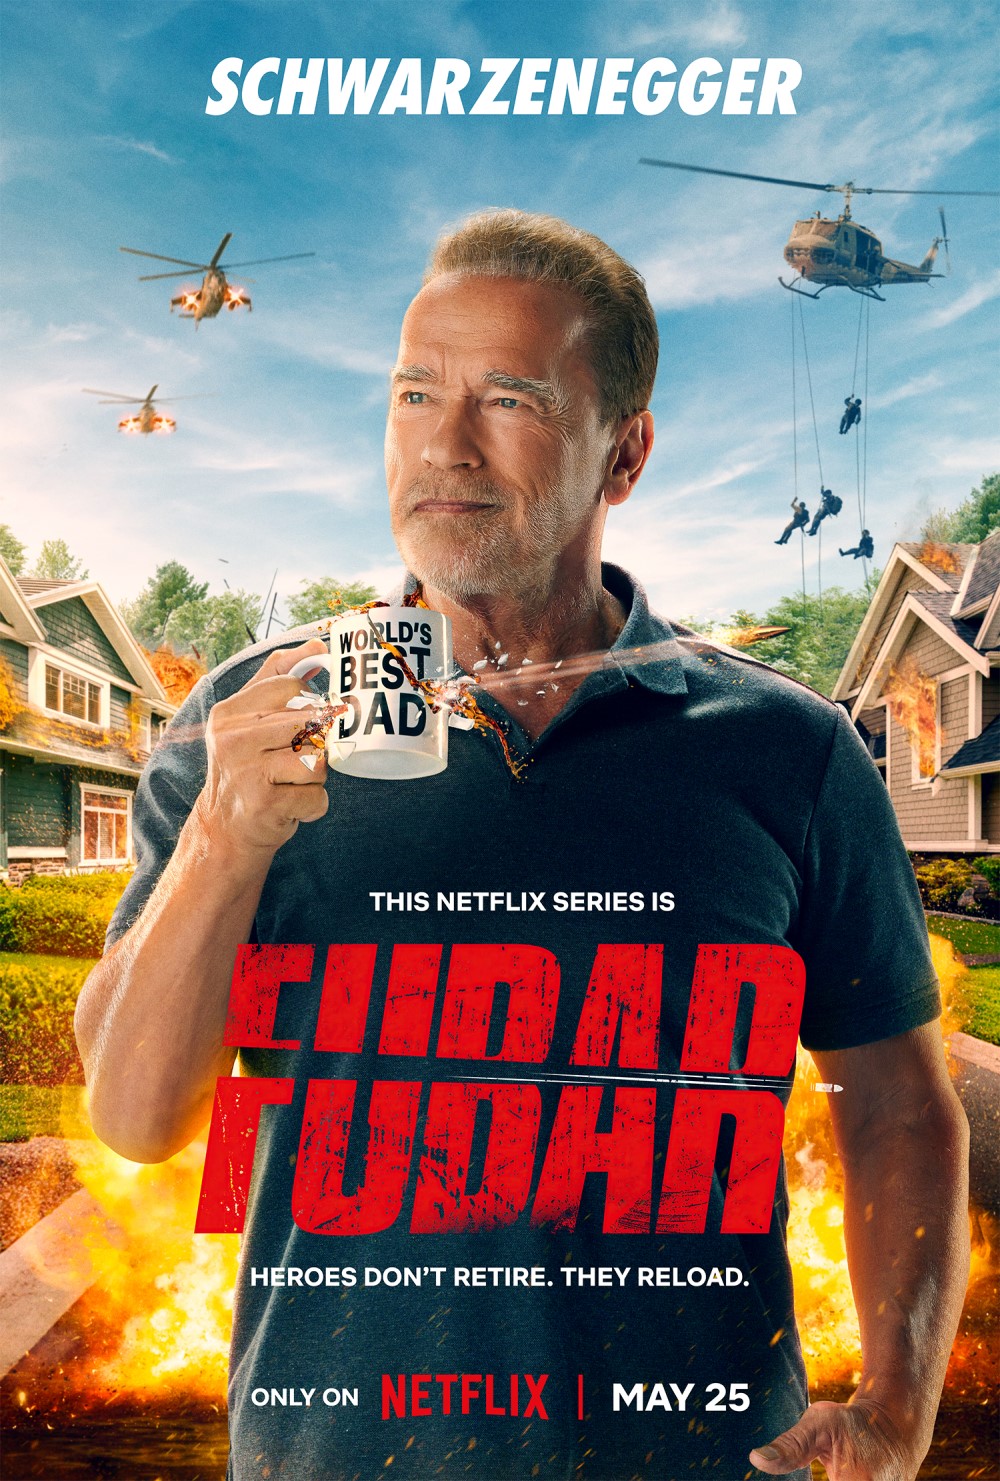 FUBAR Trailer & Poster